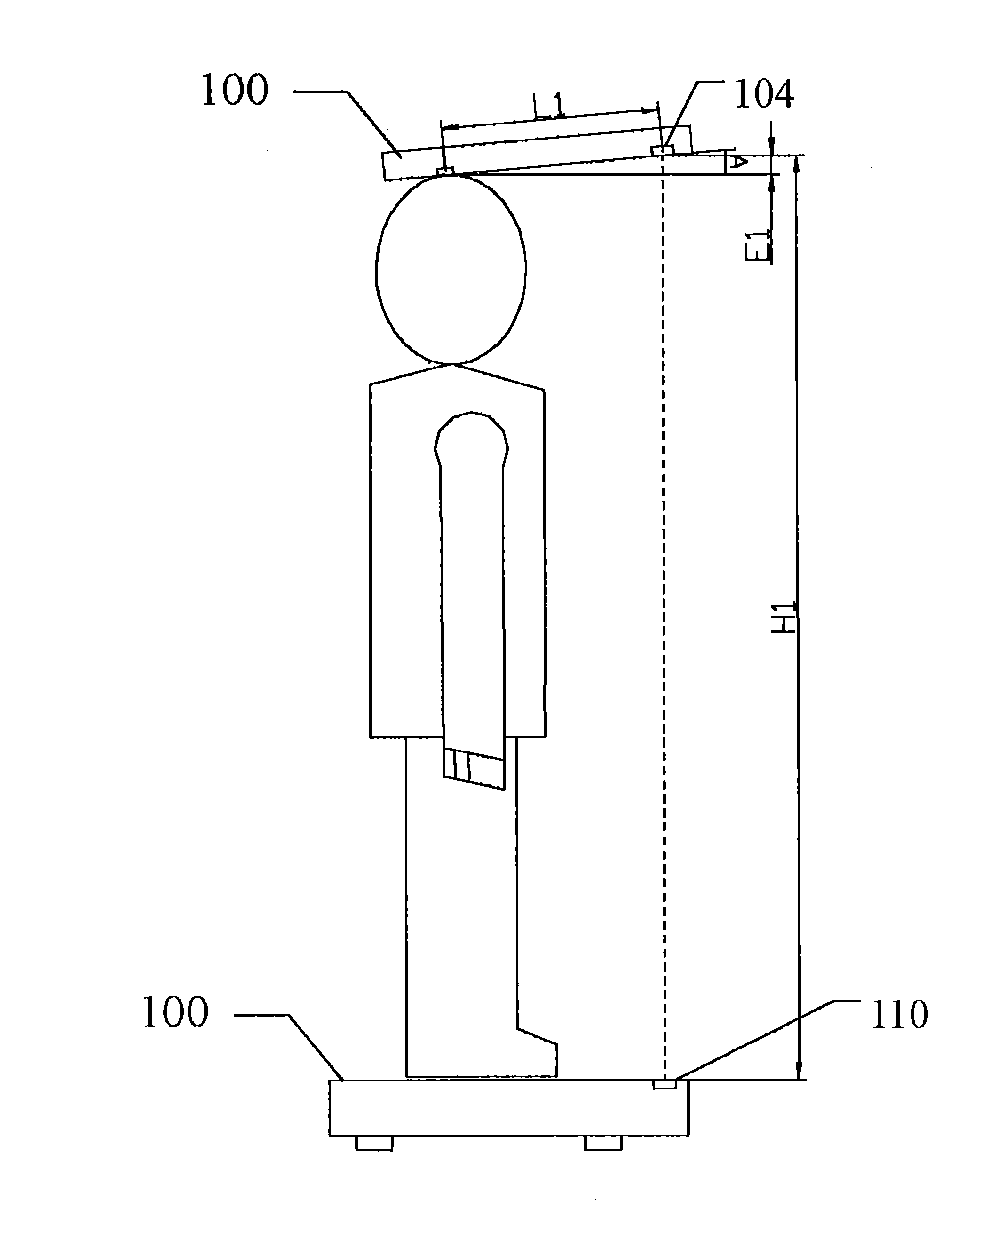 Body height measuring apparatus